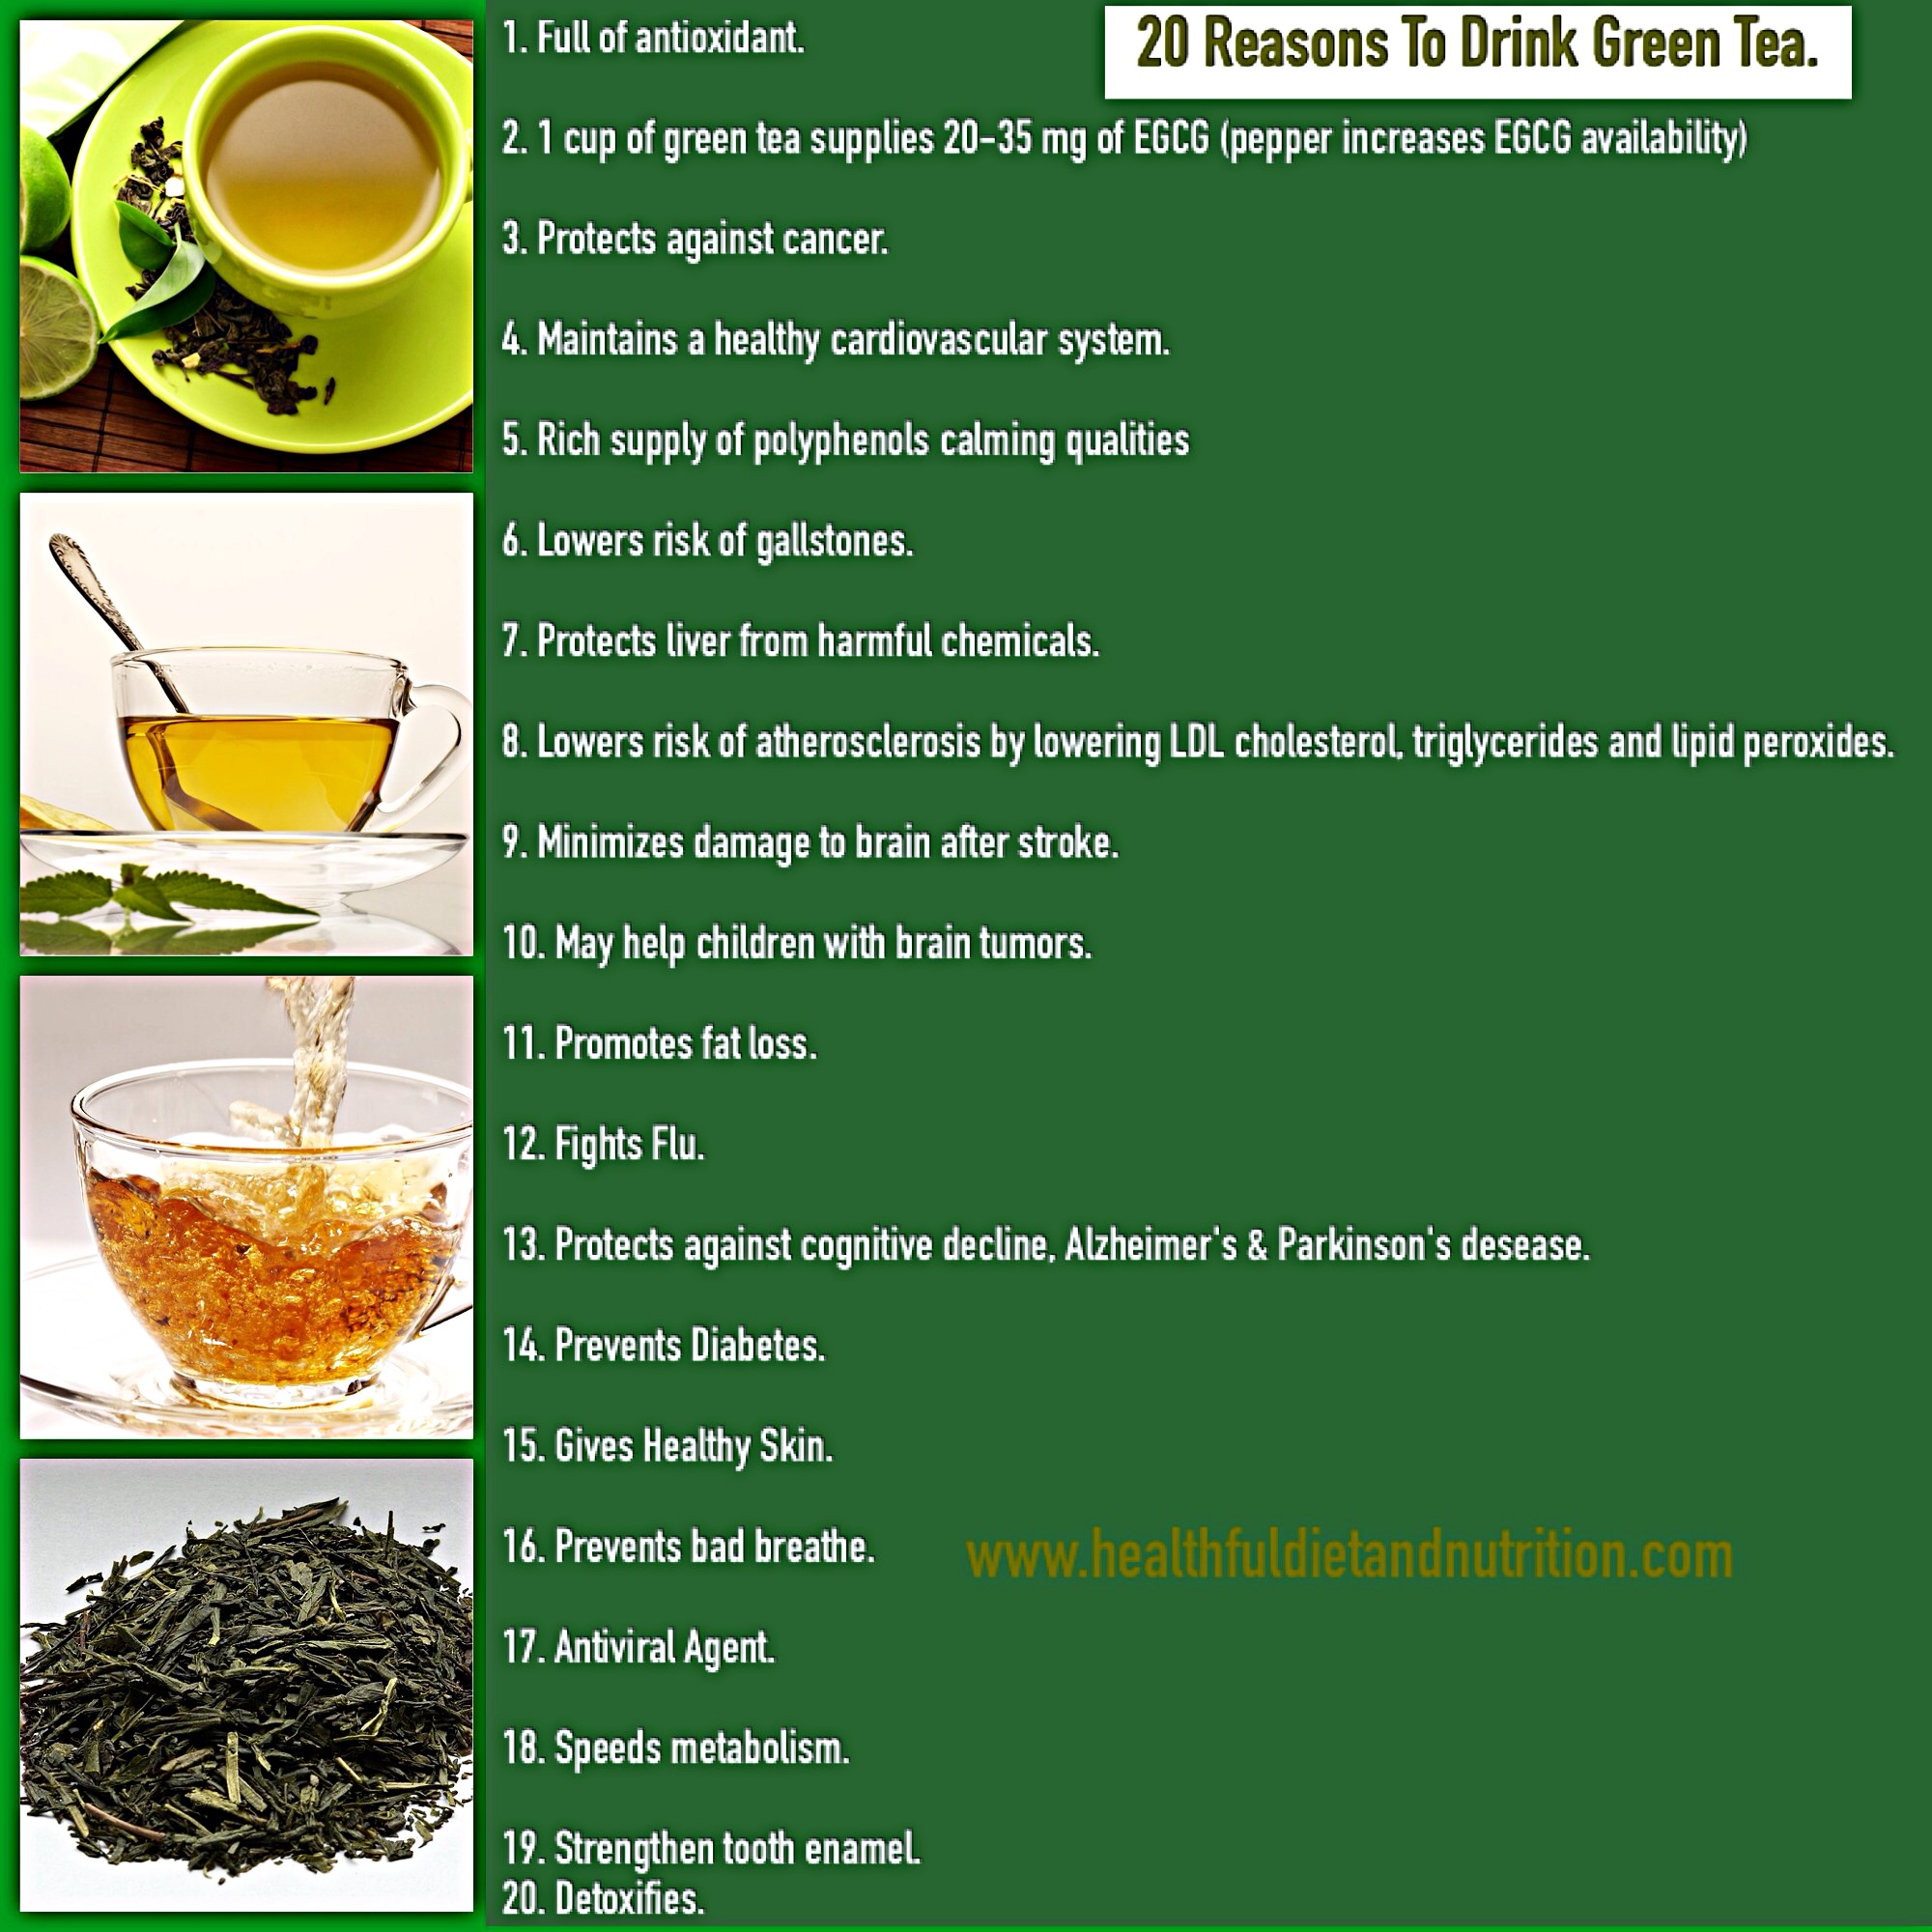 20 Reasons To Drink Green Tea